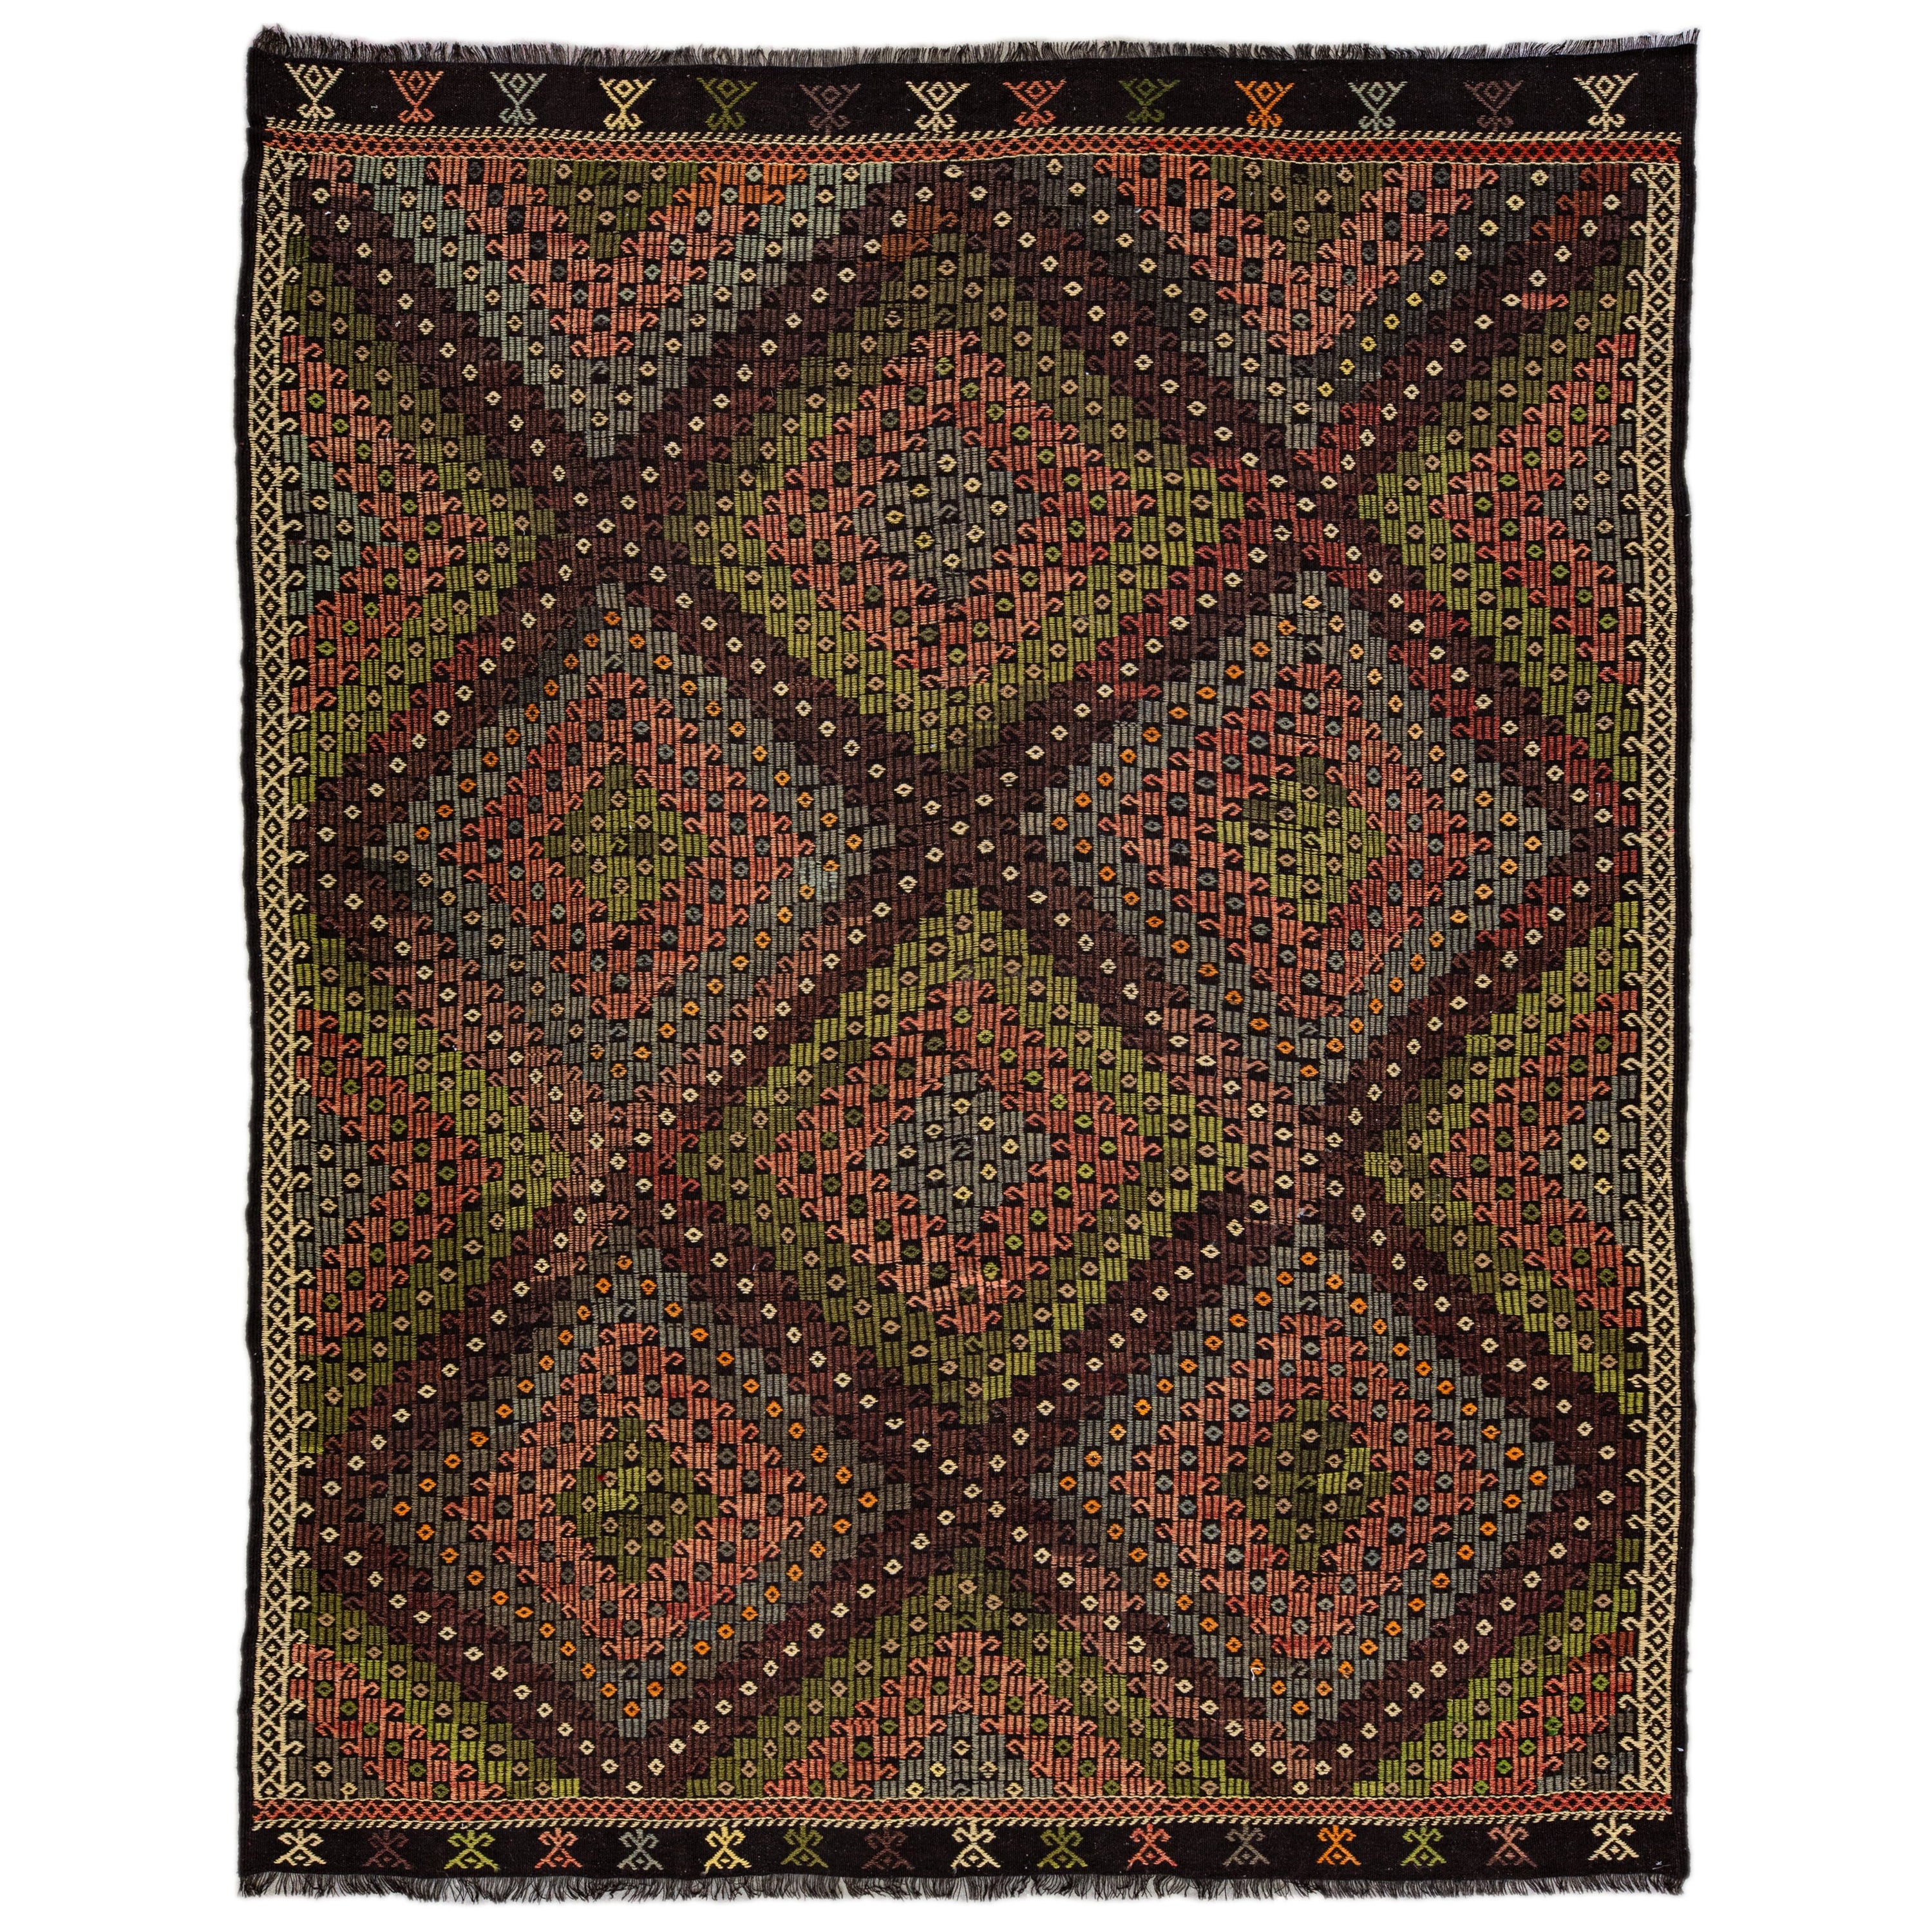 Brown and Green Modern Soumak Handmade Geometric Designed Wool Rug